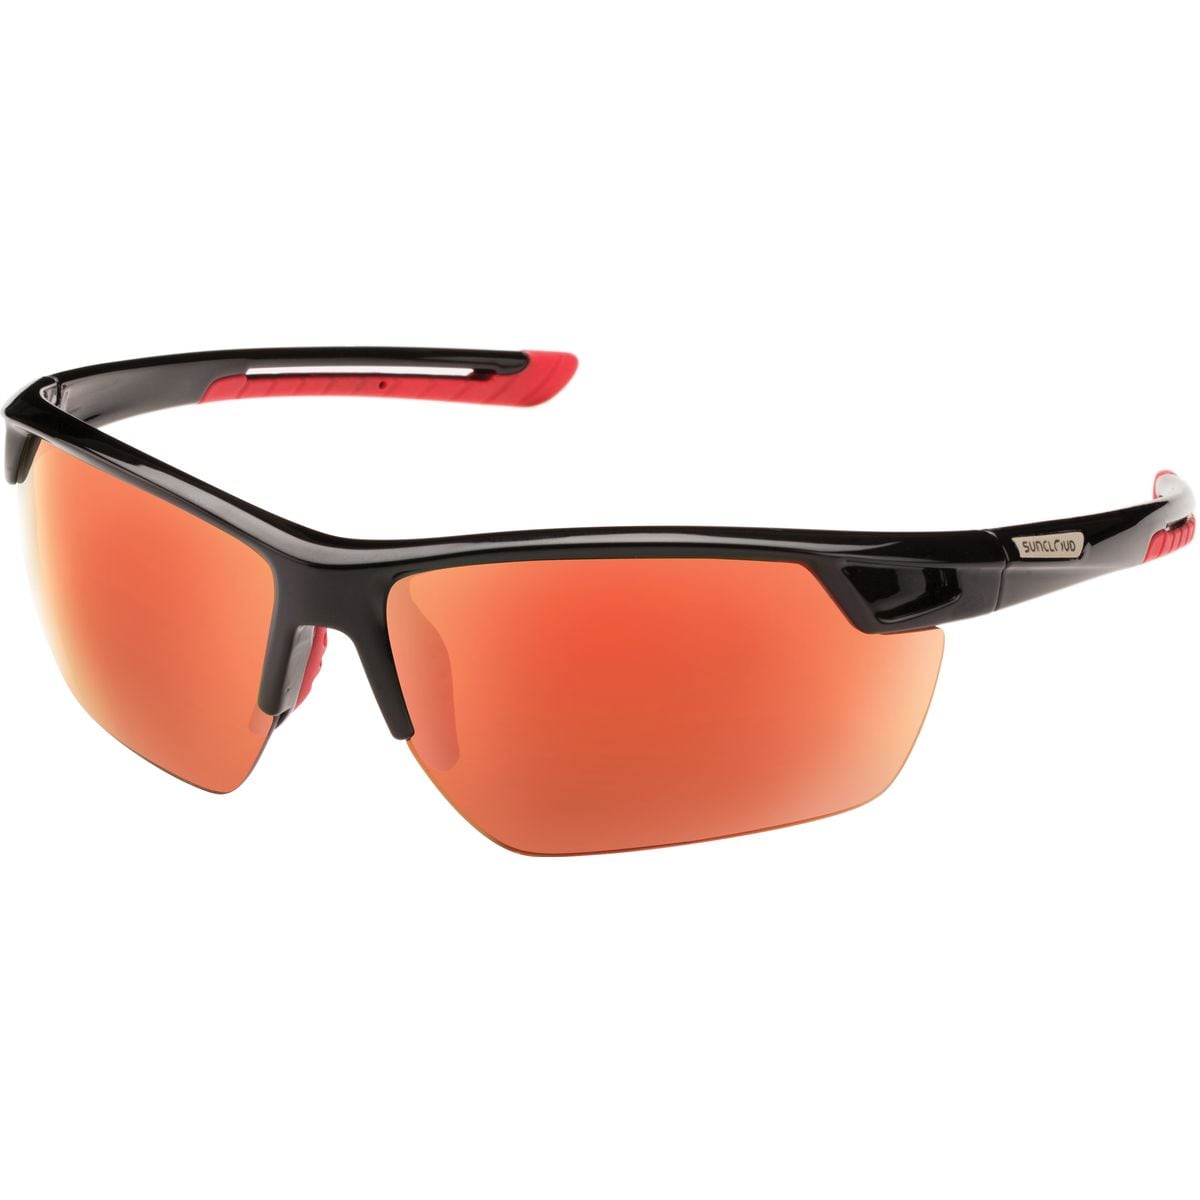 Поляризованные солнцезащитные очки contender Suncloud Polarized Optics, цвет black/red mirror очки солнцезащитные stylemark polarized l2438f photochrome хамелеон